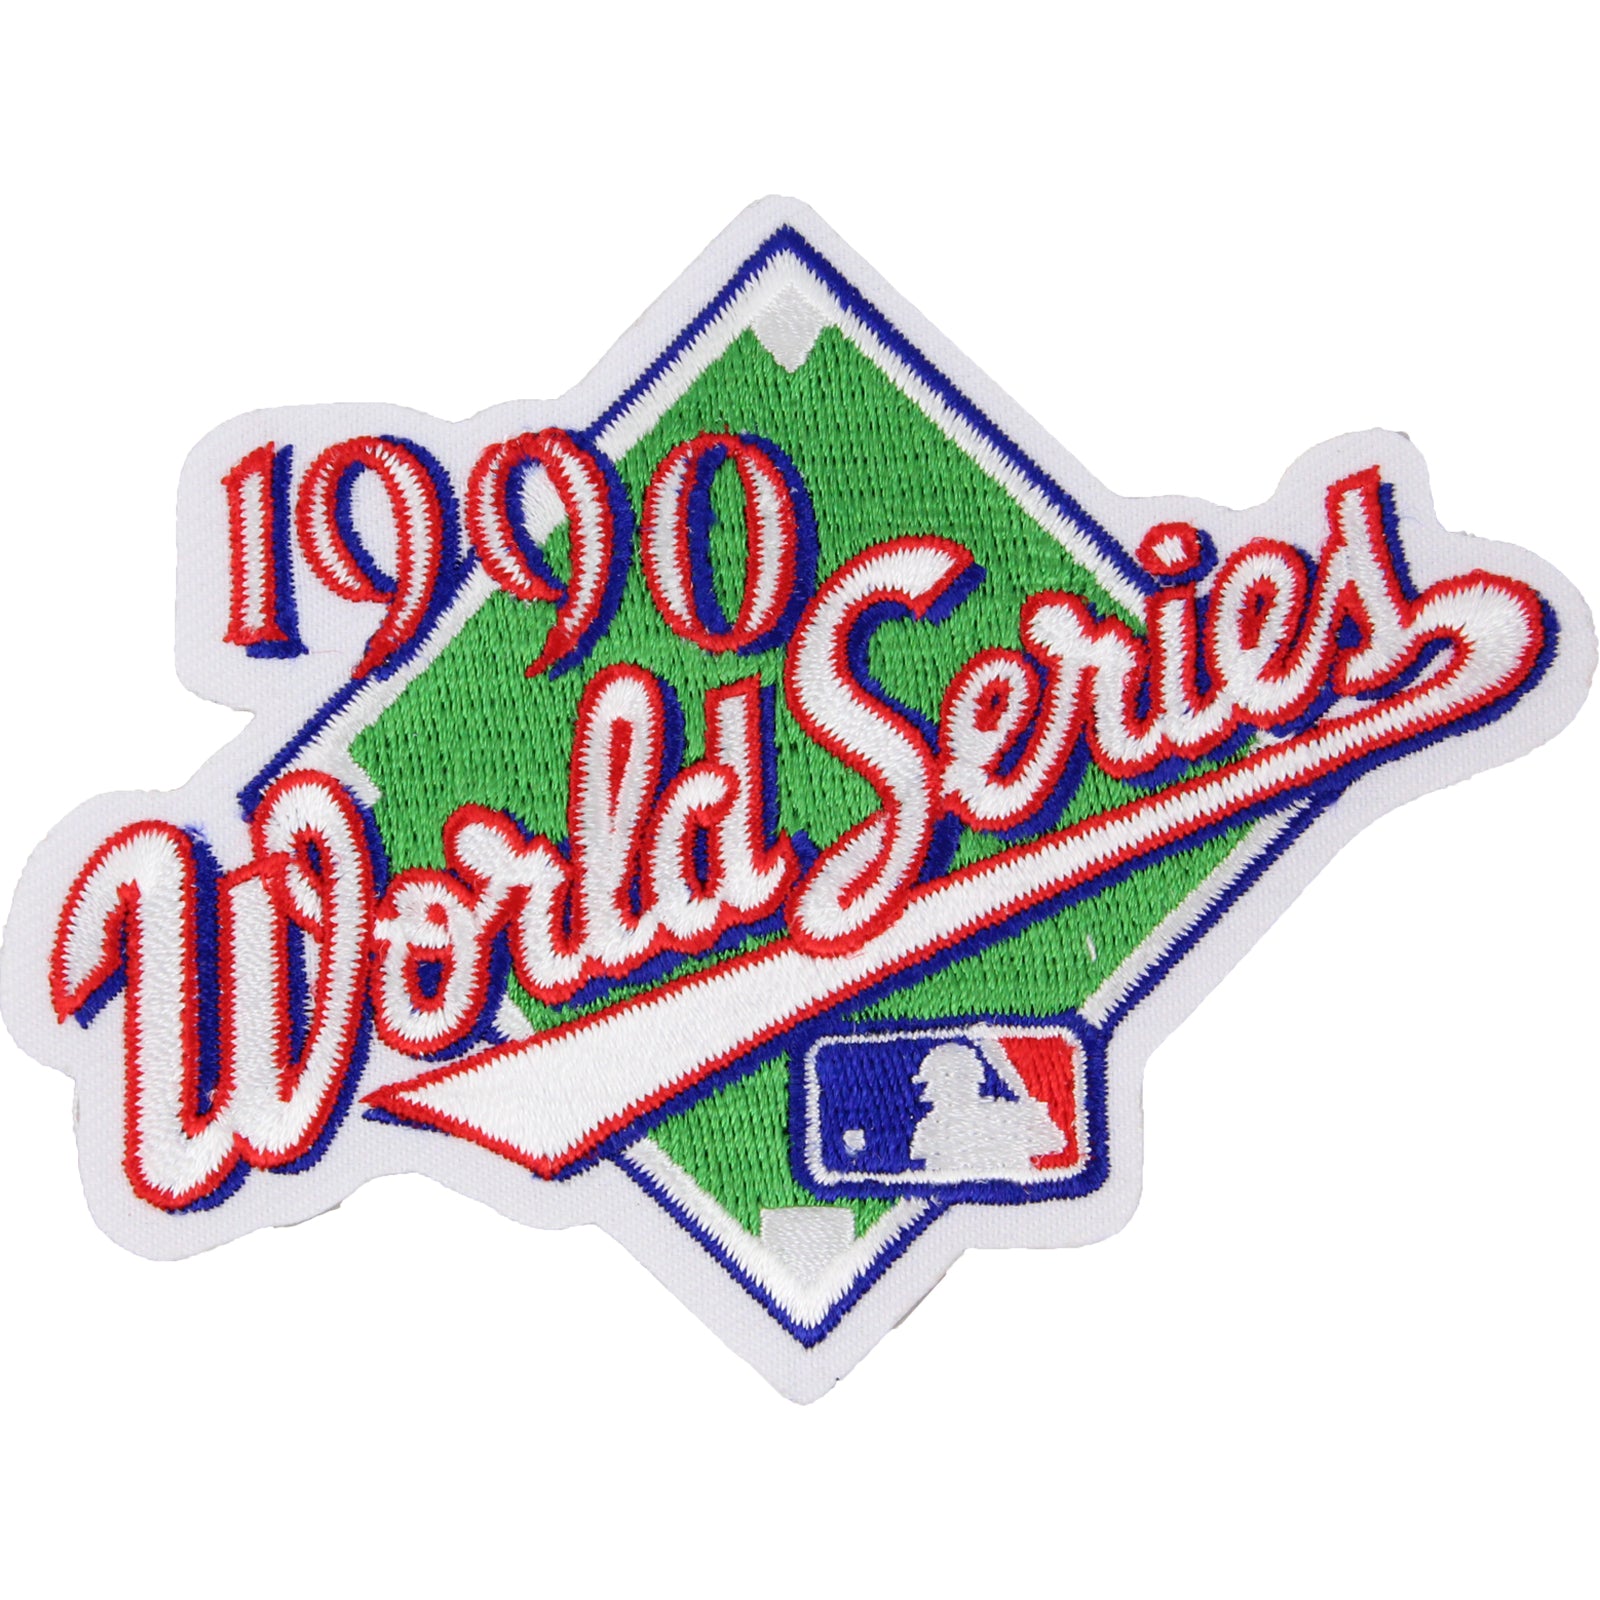 1990 World Series, Game 4: Reds @ Athletics 